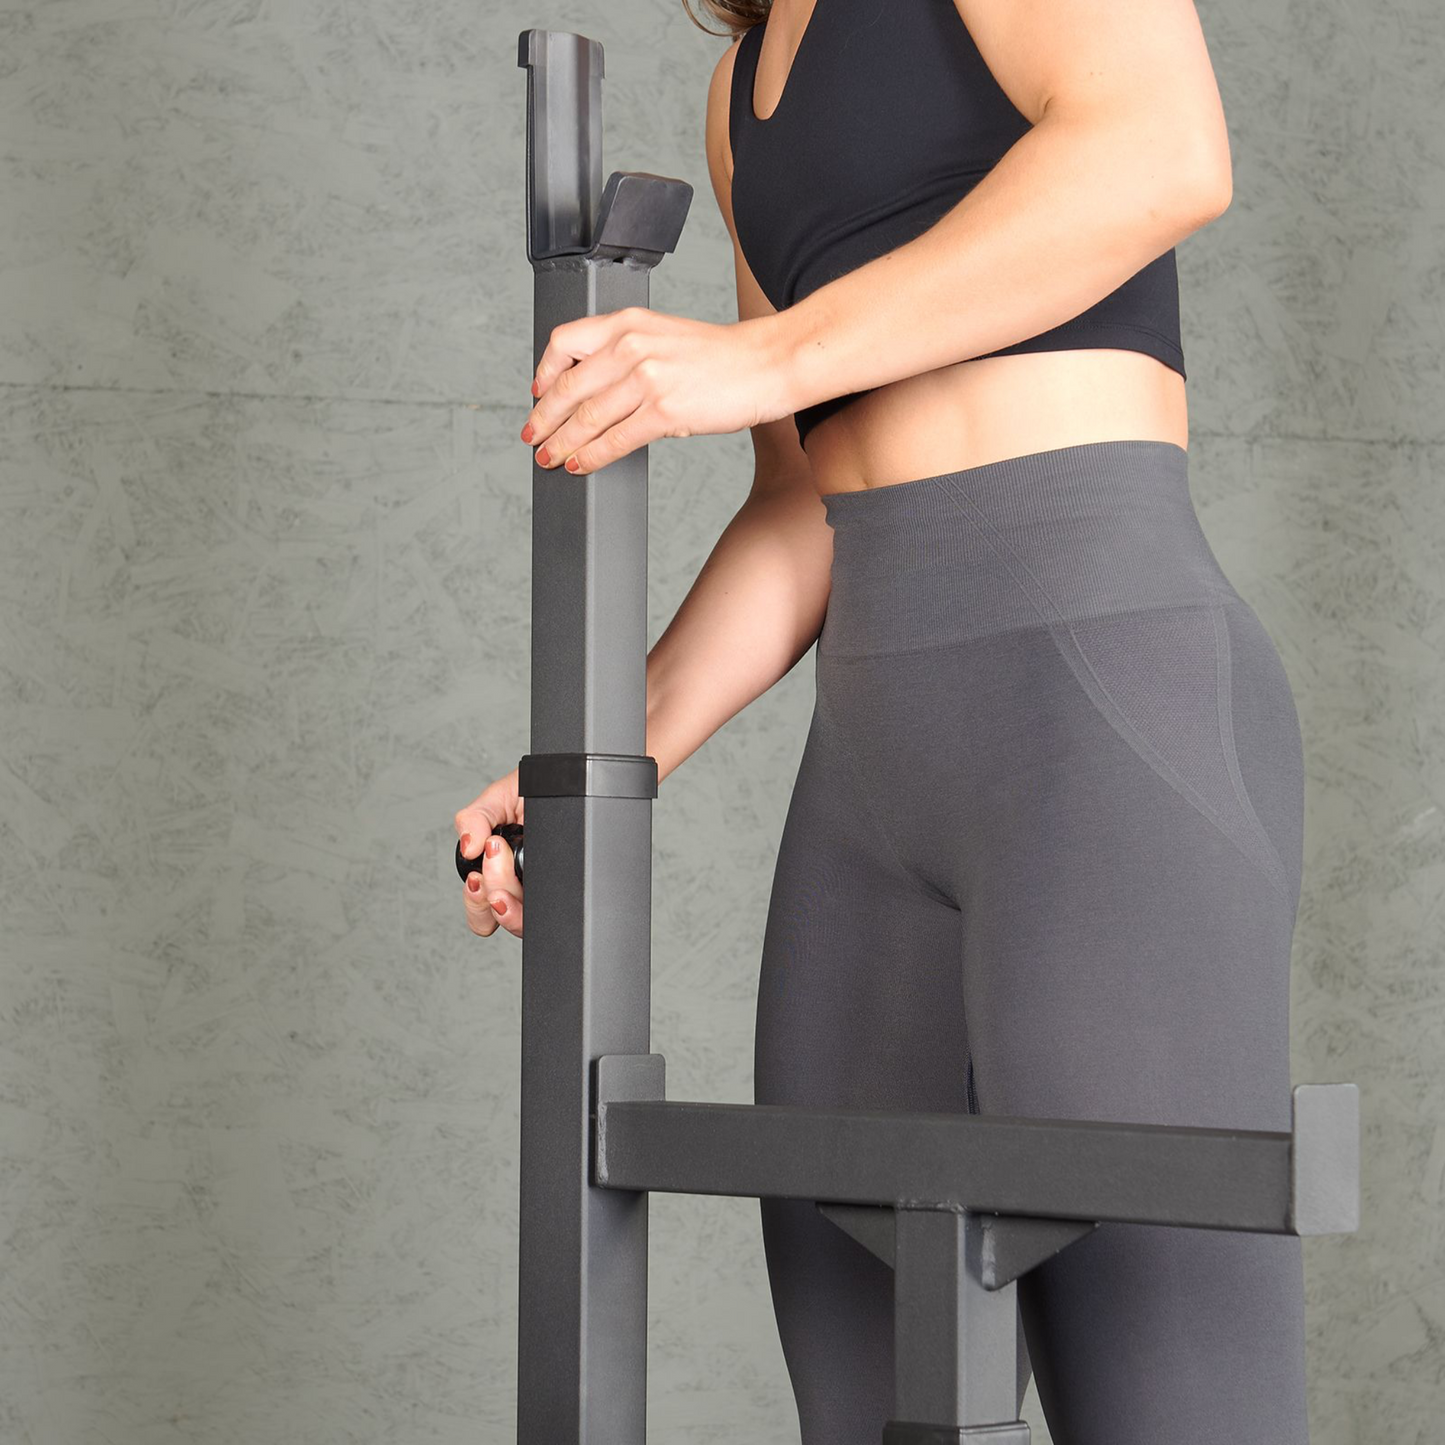 Mirafit Adjustable Weight Bench & Squat Rack